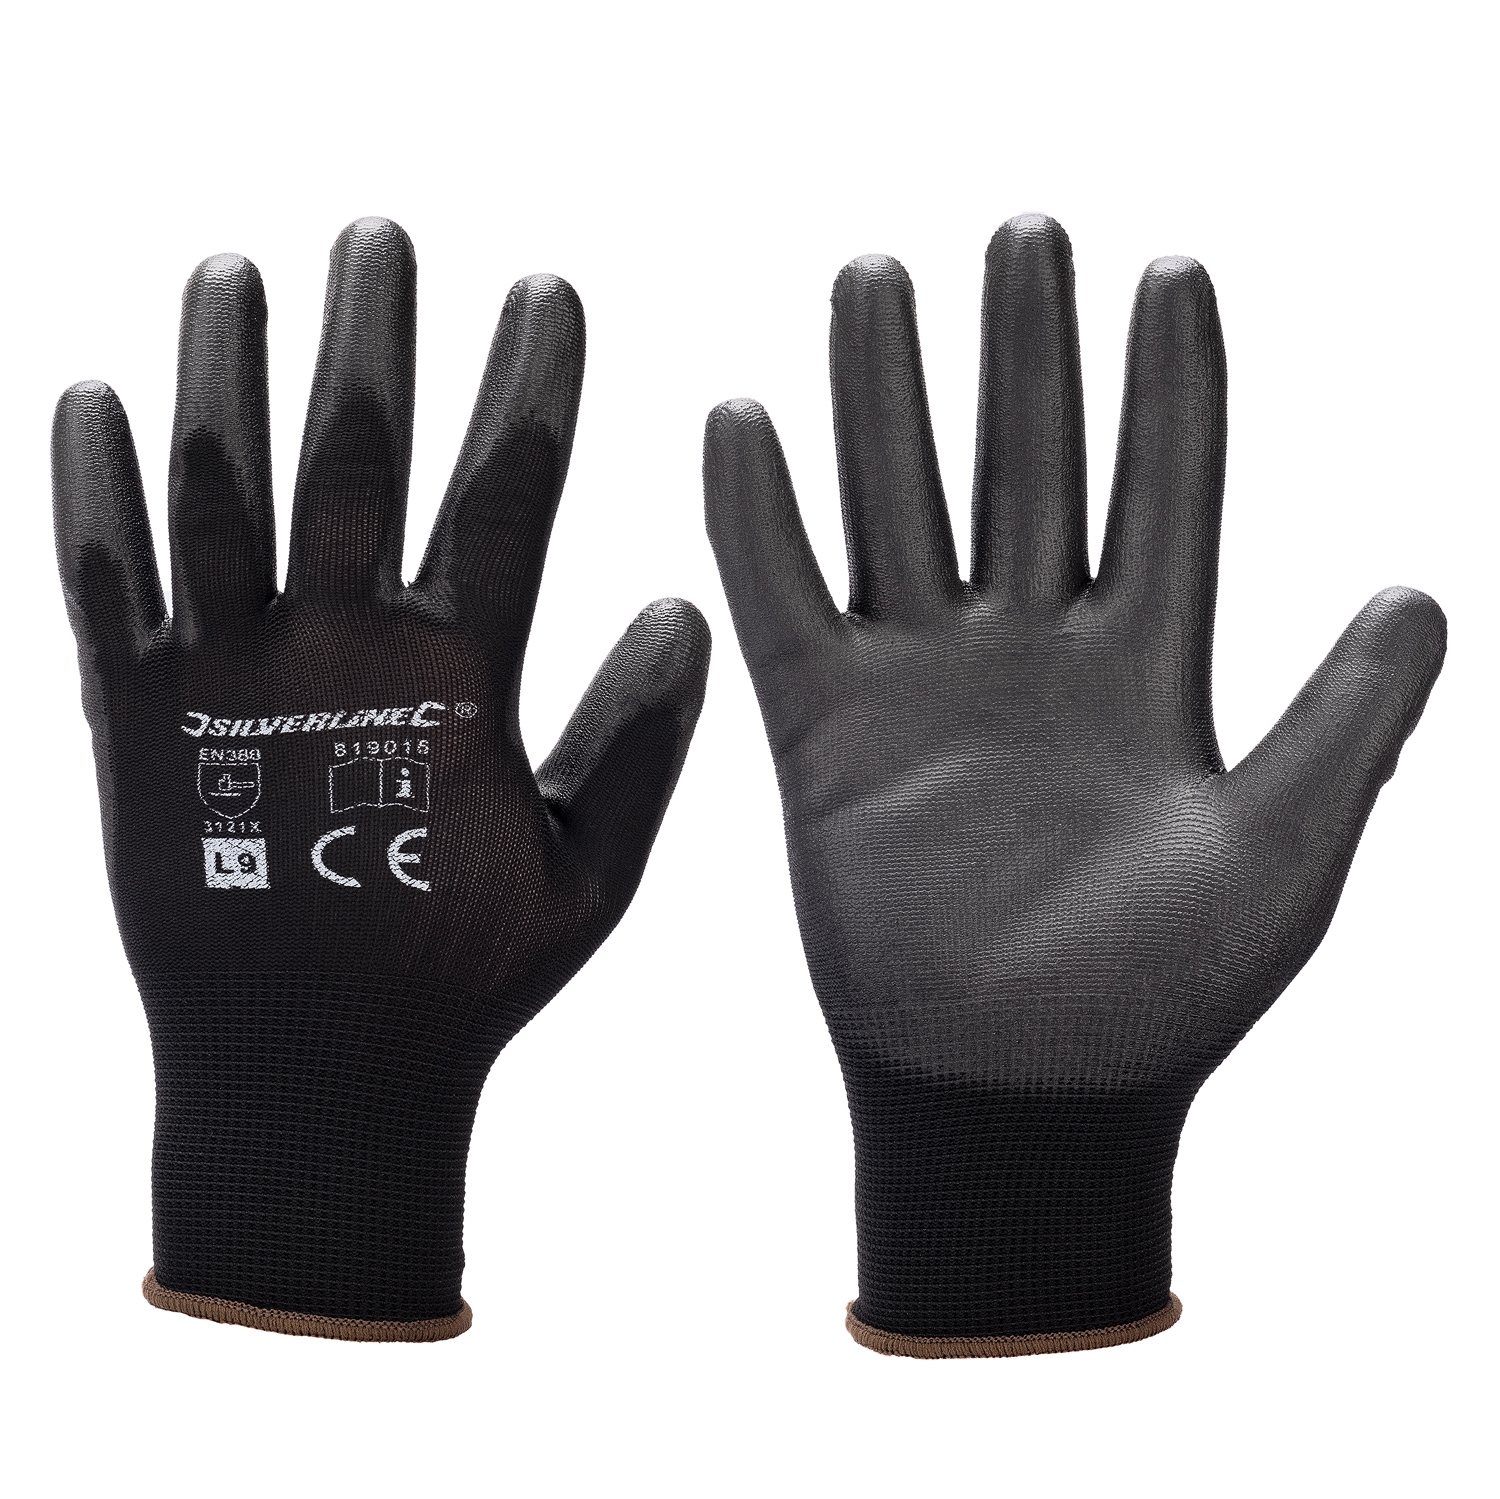 https://www.bt-ingenieros.com/15582/guantes-de-seguridad-anticorte-de-poliuretano-talla-l.jpg